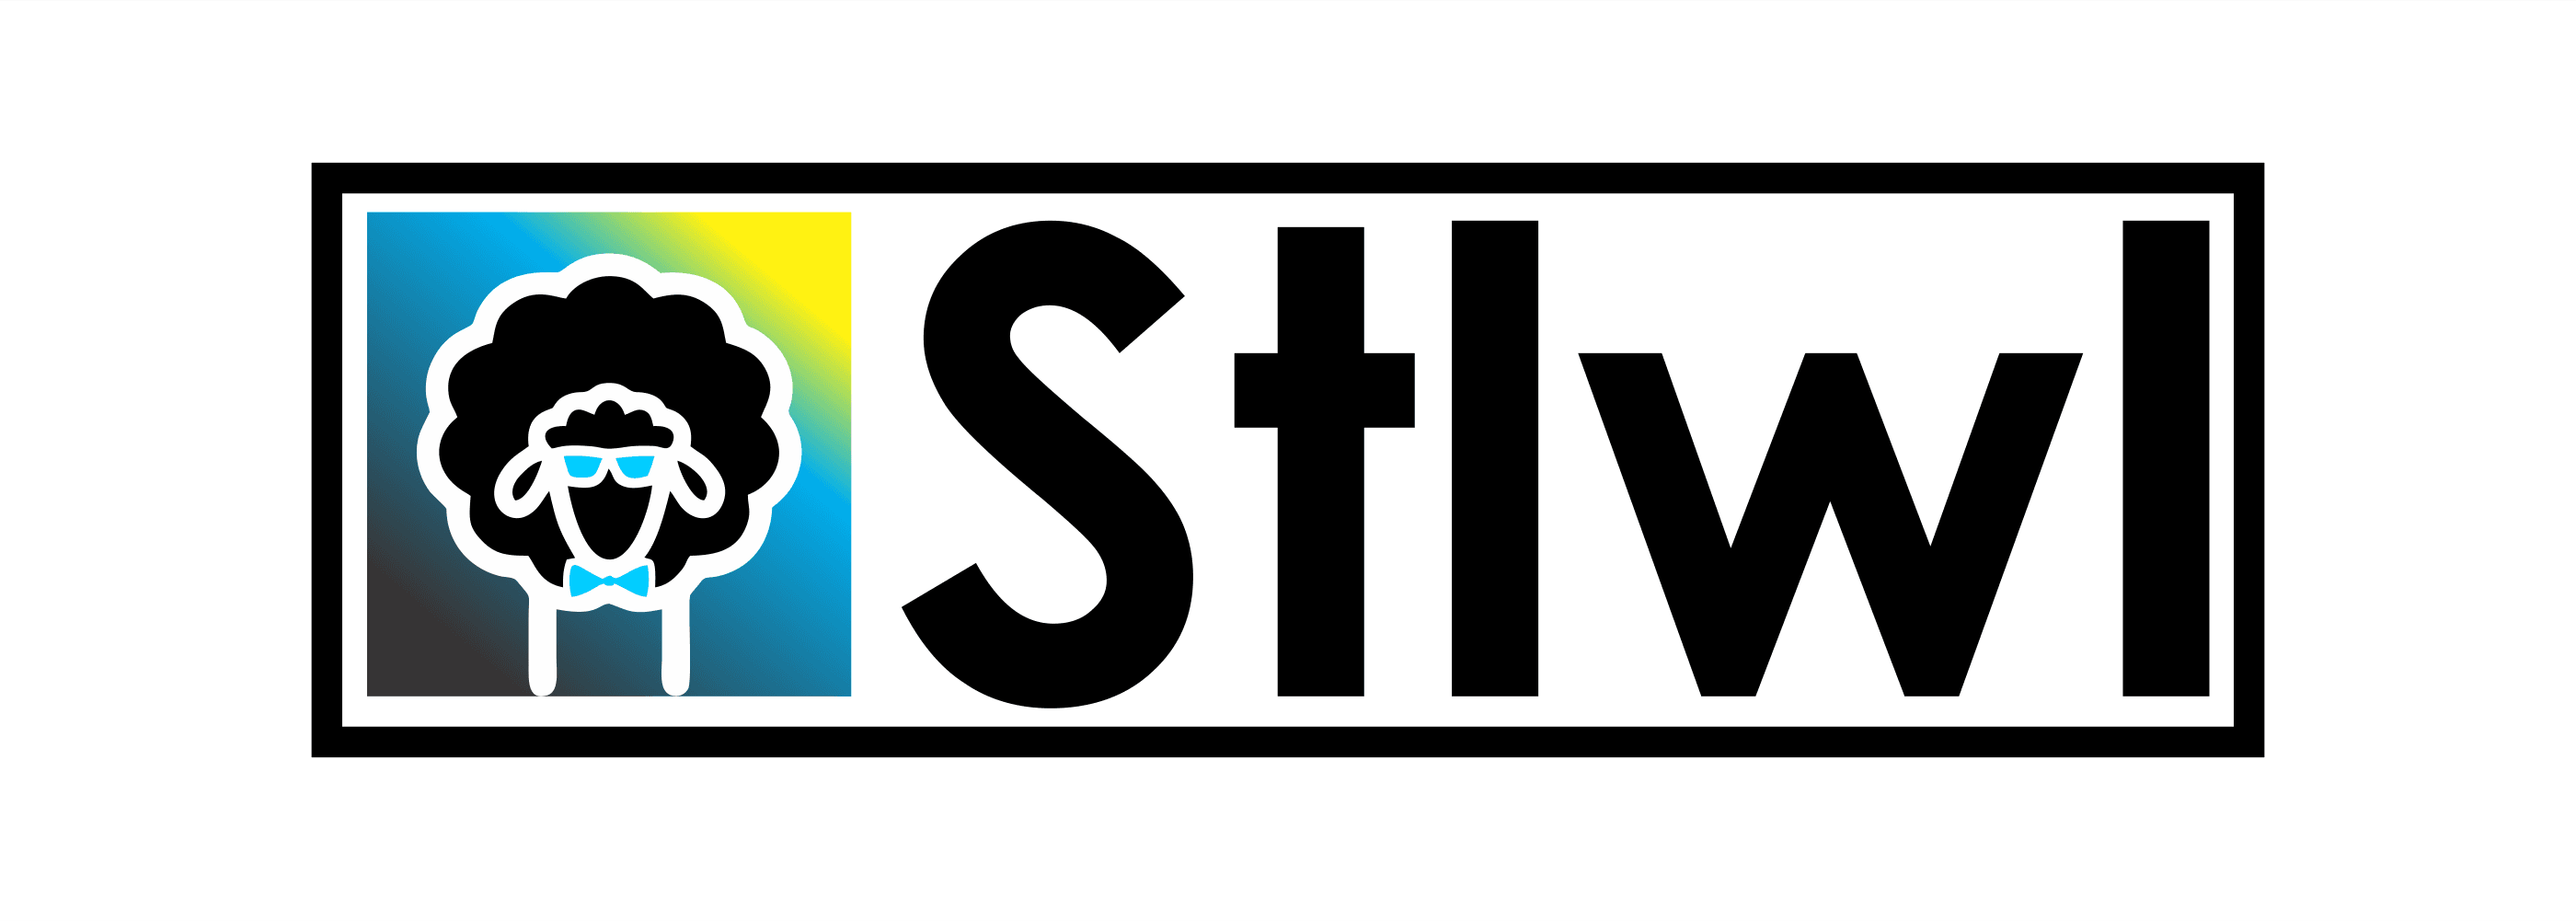 STLWL_Creative-Colab バナー